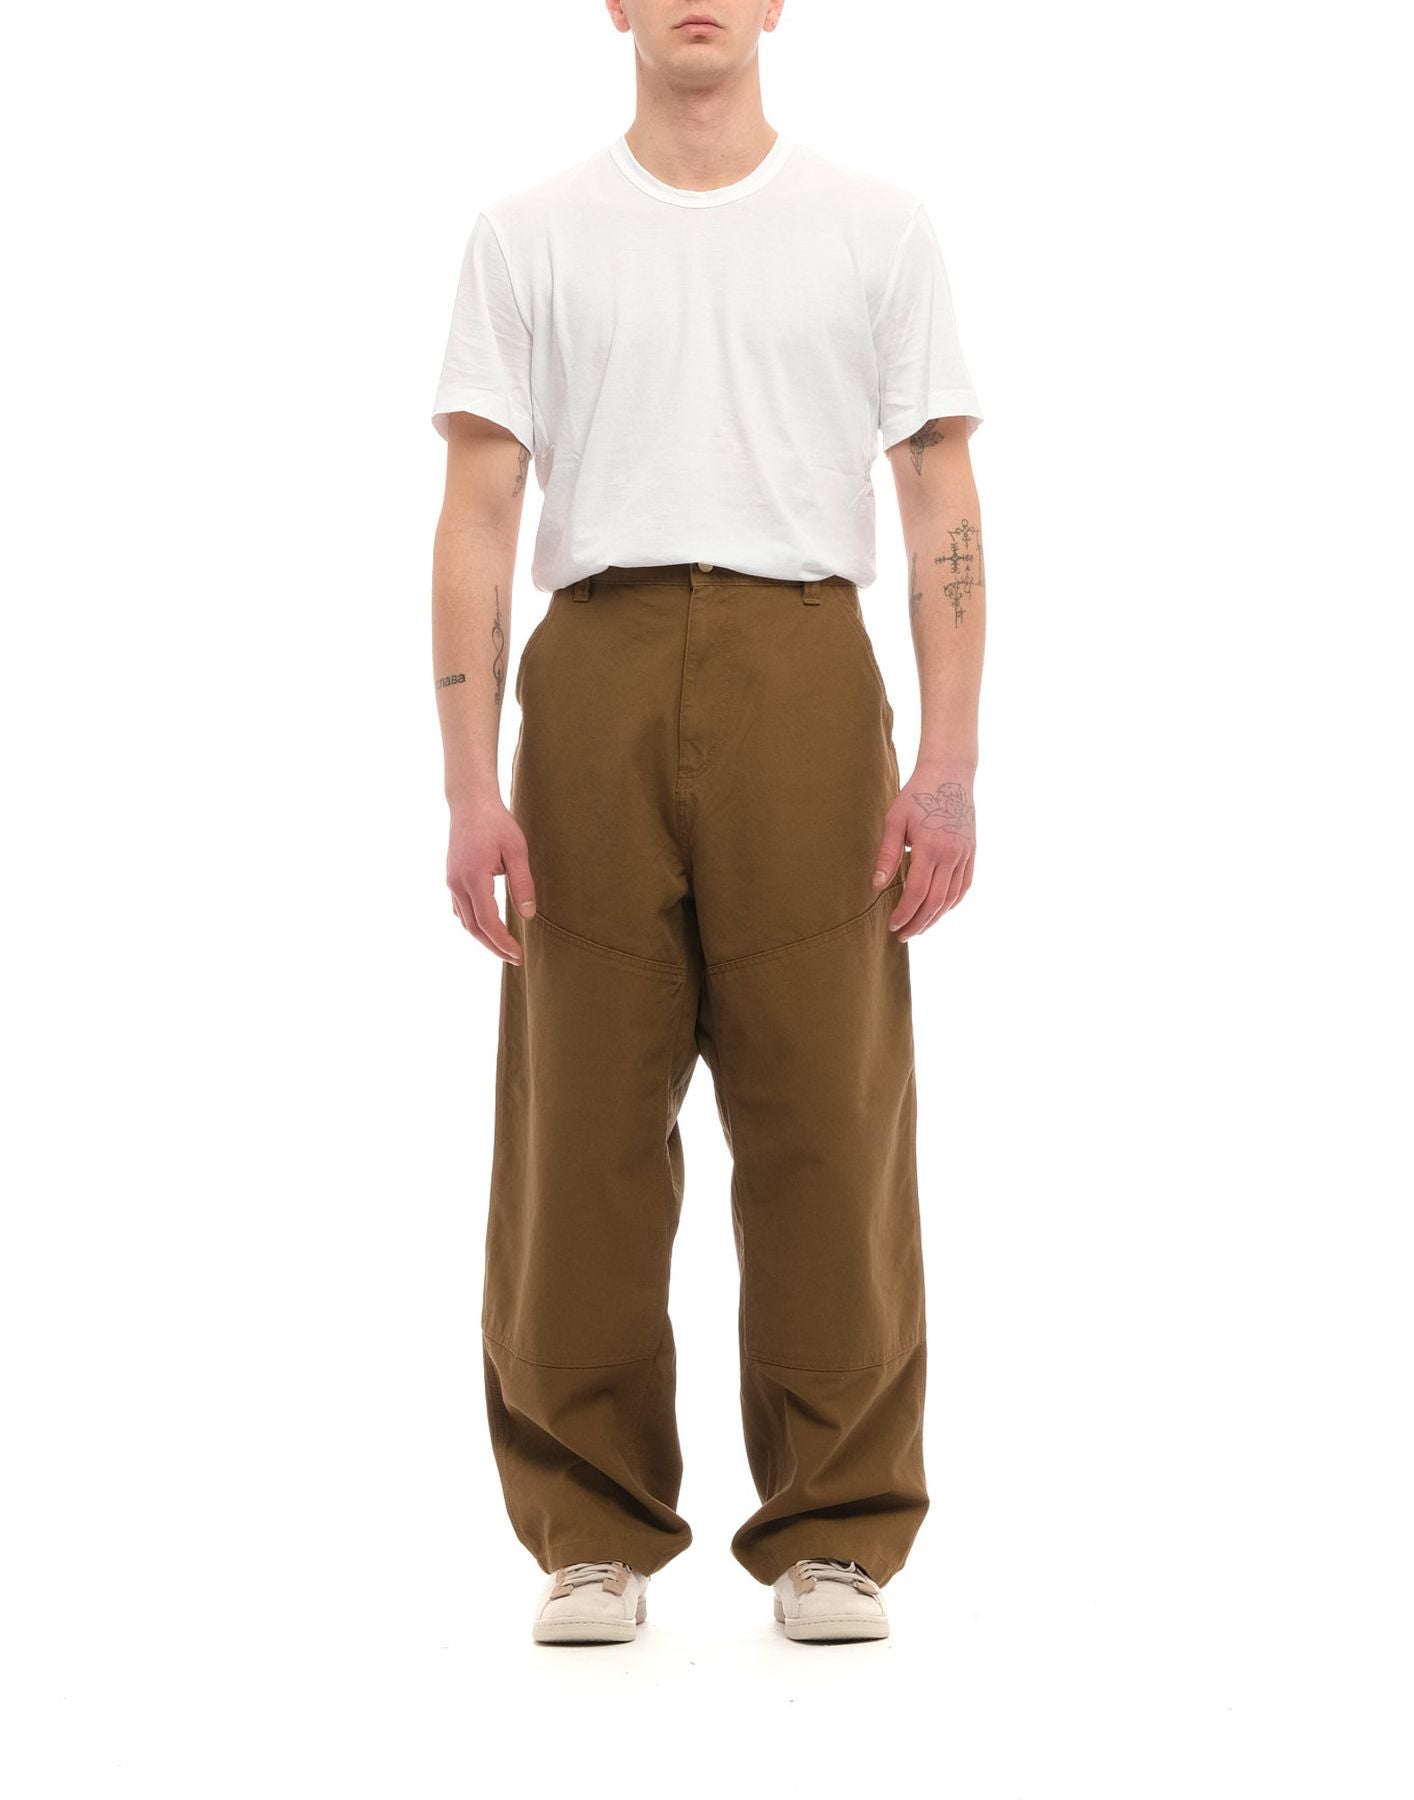 Pantalones para hombre I031393 BROWN CARHARTT